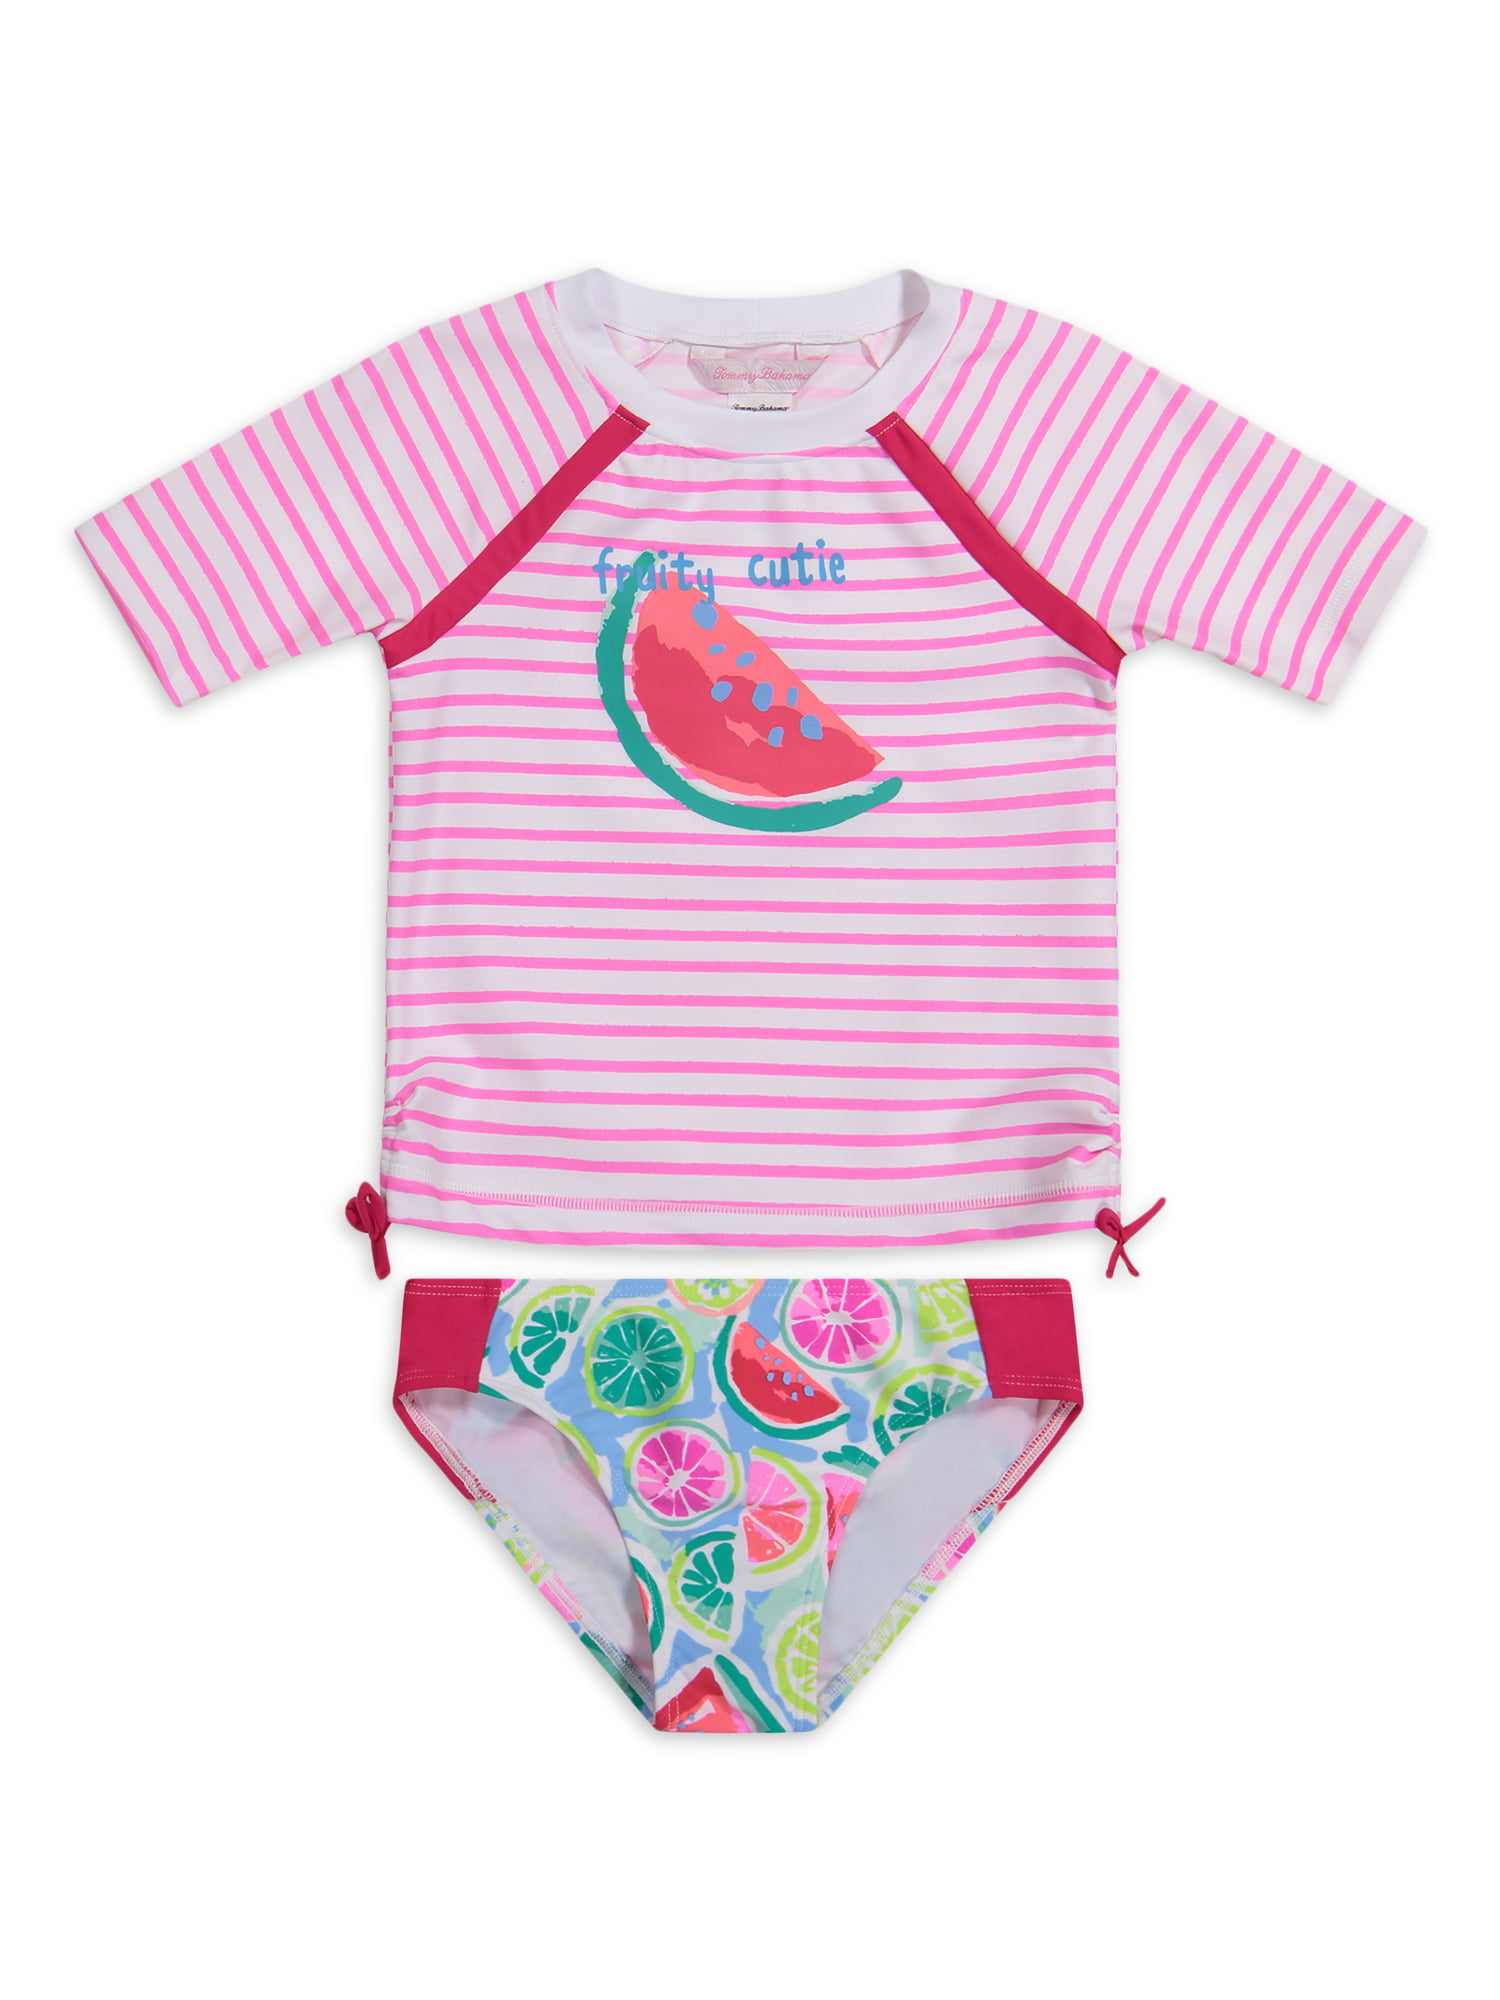 Tommy Bahama Toddler Girl's 1 Pc Long Sleeve Rash Guard Swimsuit Fruit 3T/4T 